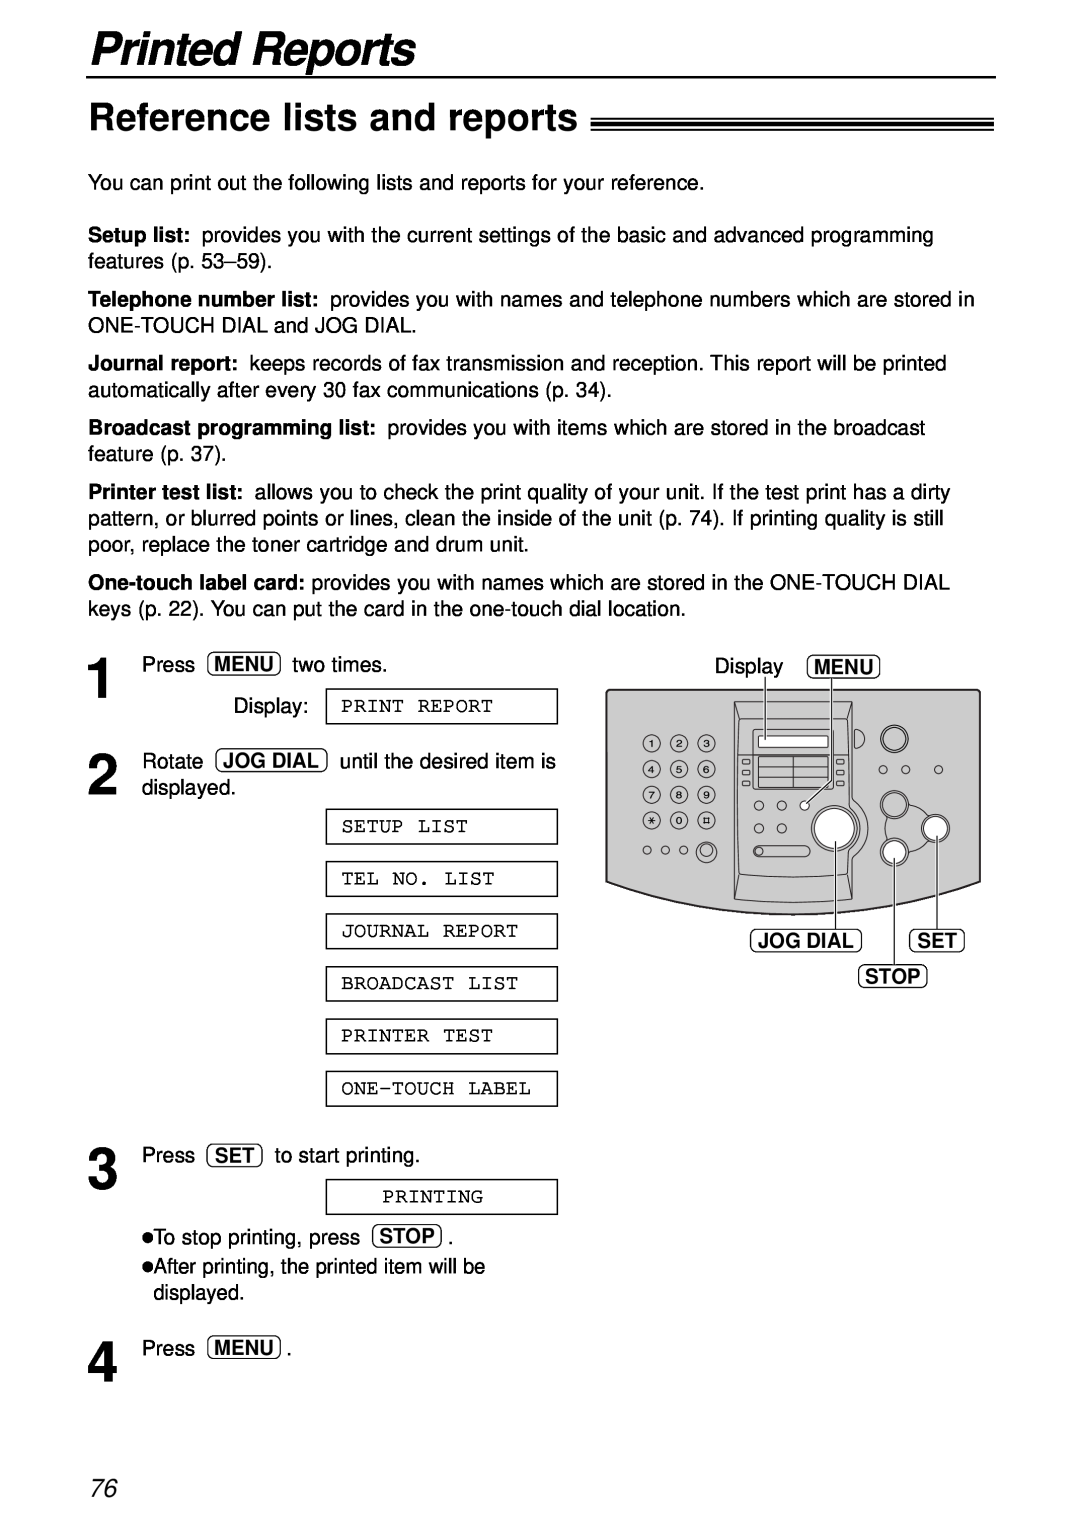 Panasonic KX-FL501 manual Printed Reports, Reference lists and reports, Menu, Jog Dial, Stop 